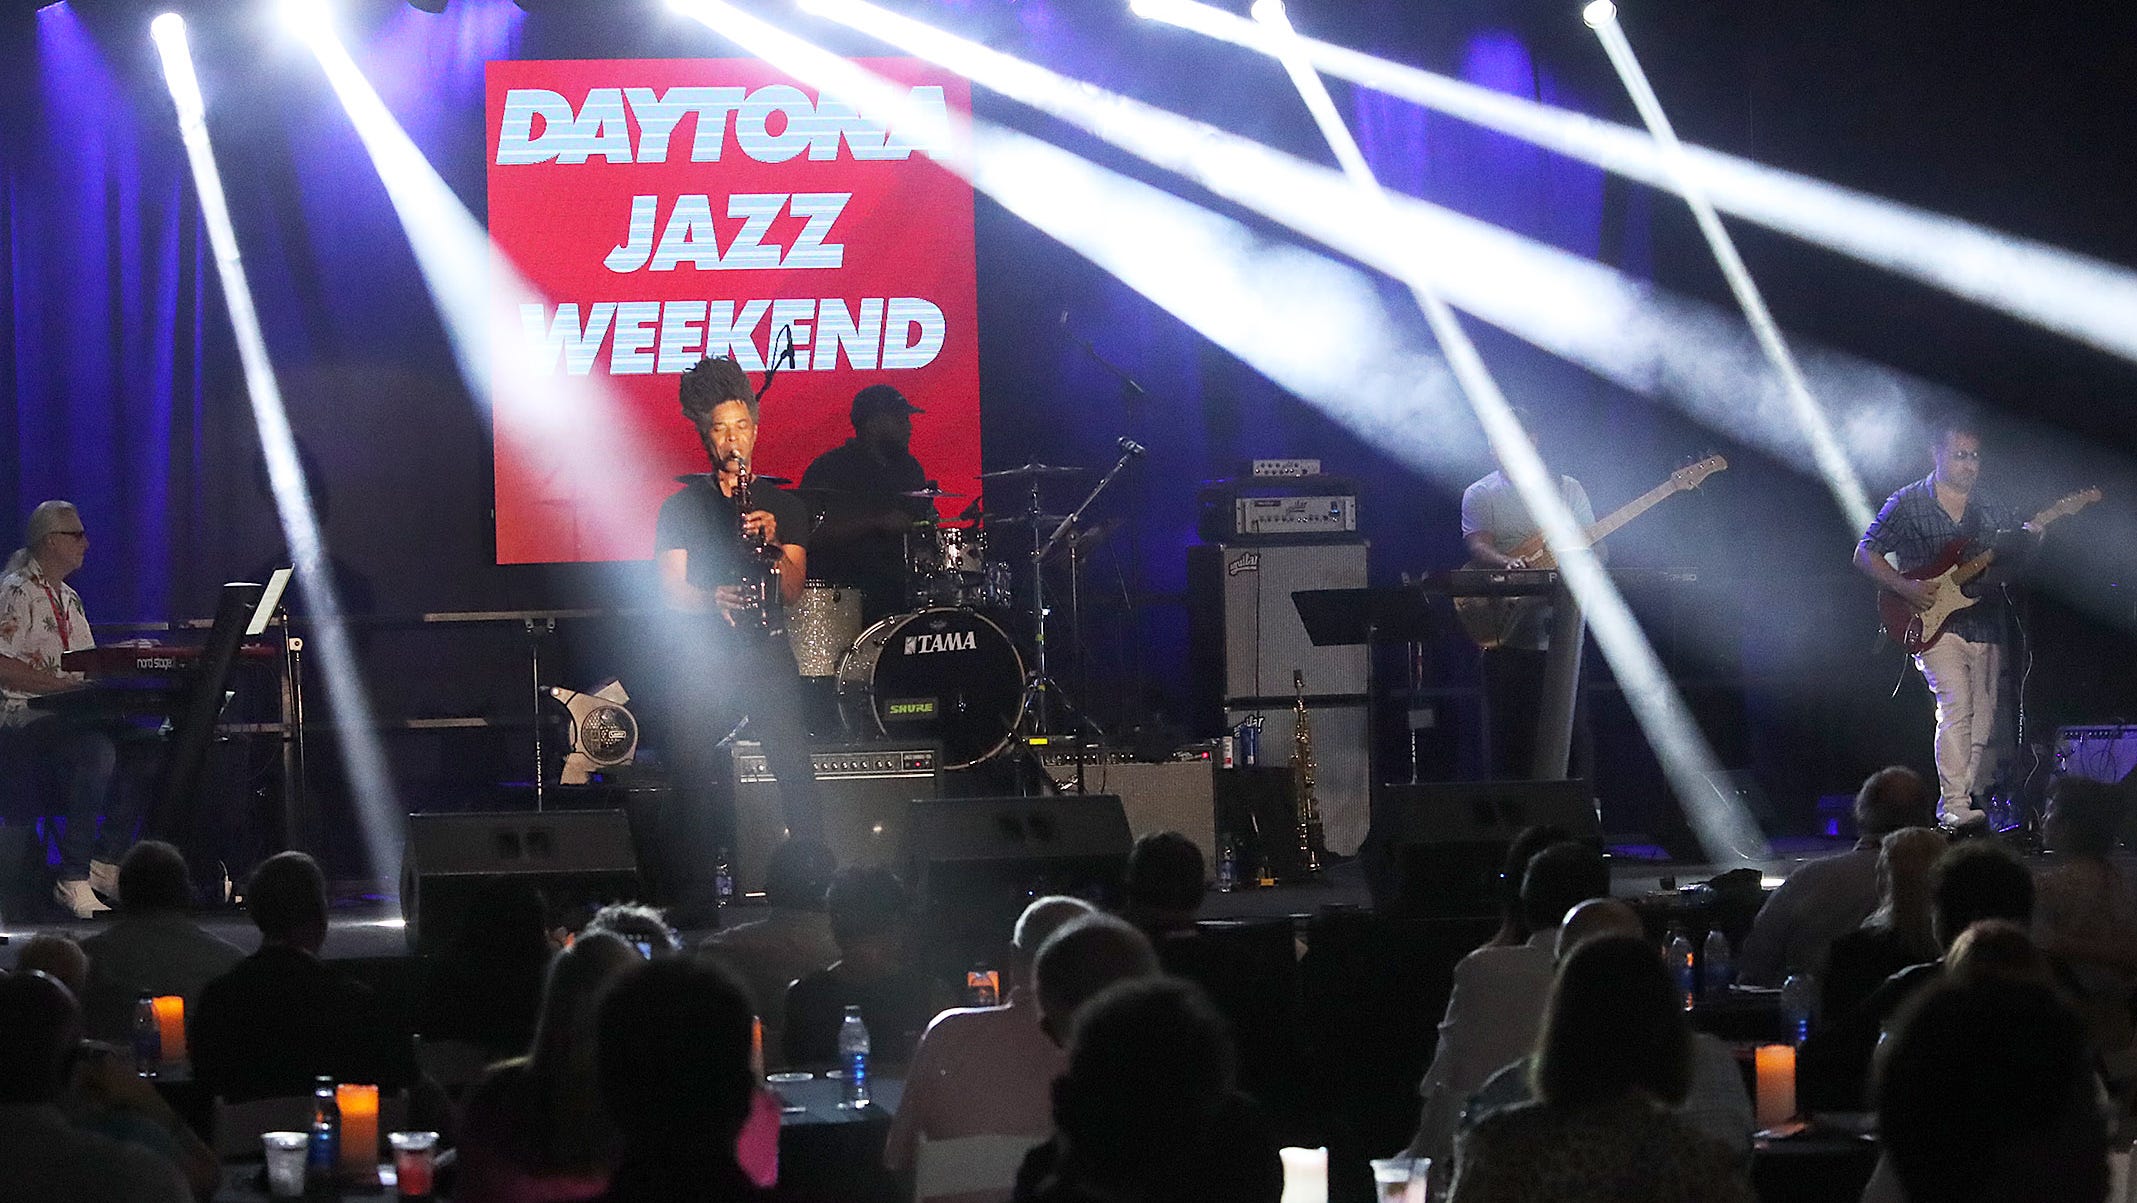 Daytona Jazz Weekend hosts Smooth jazz stars in Daytona Beach